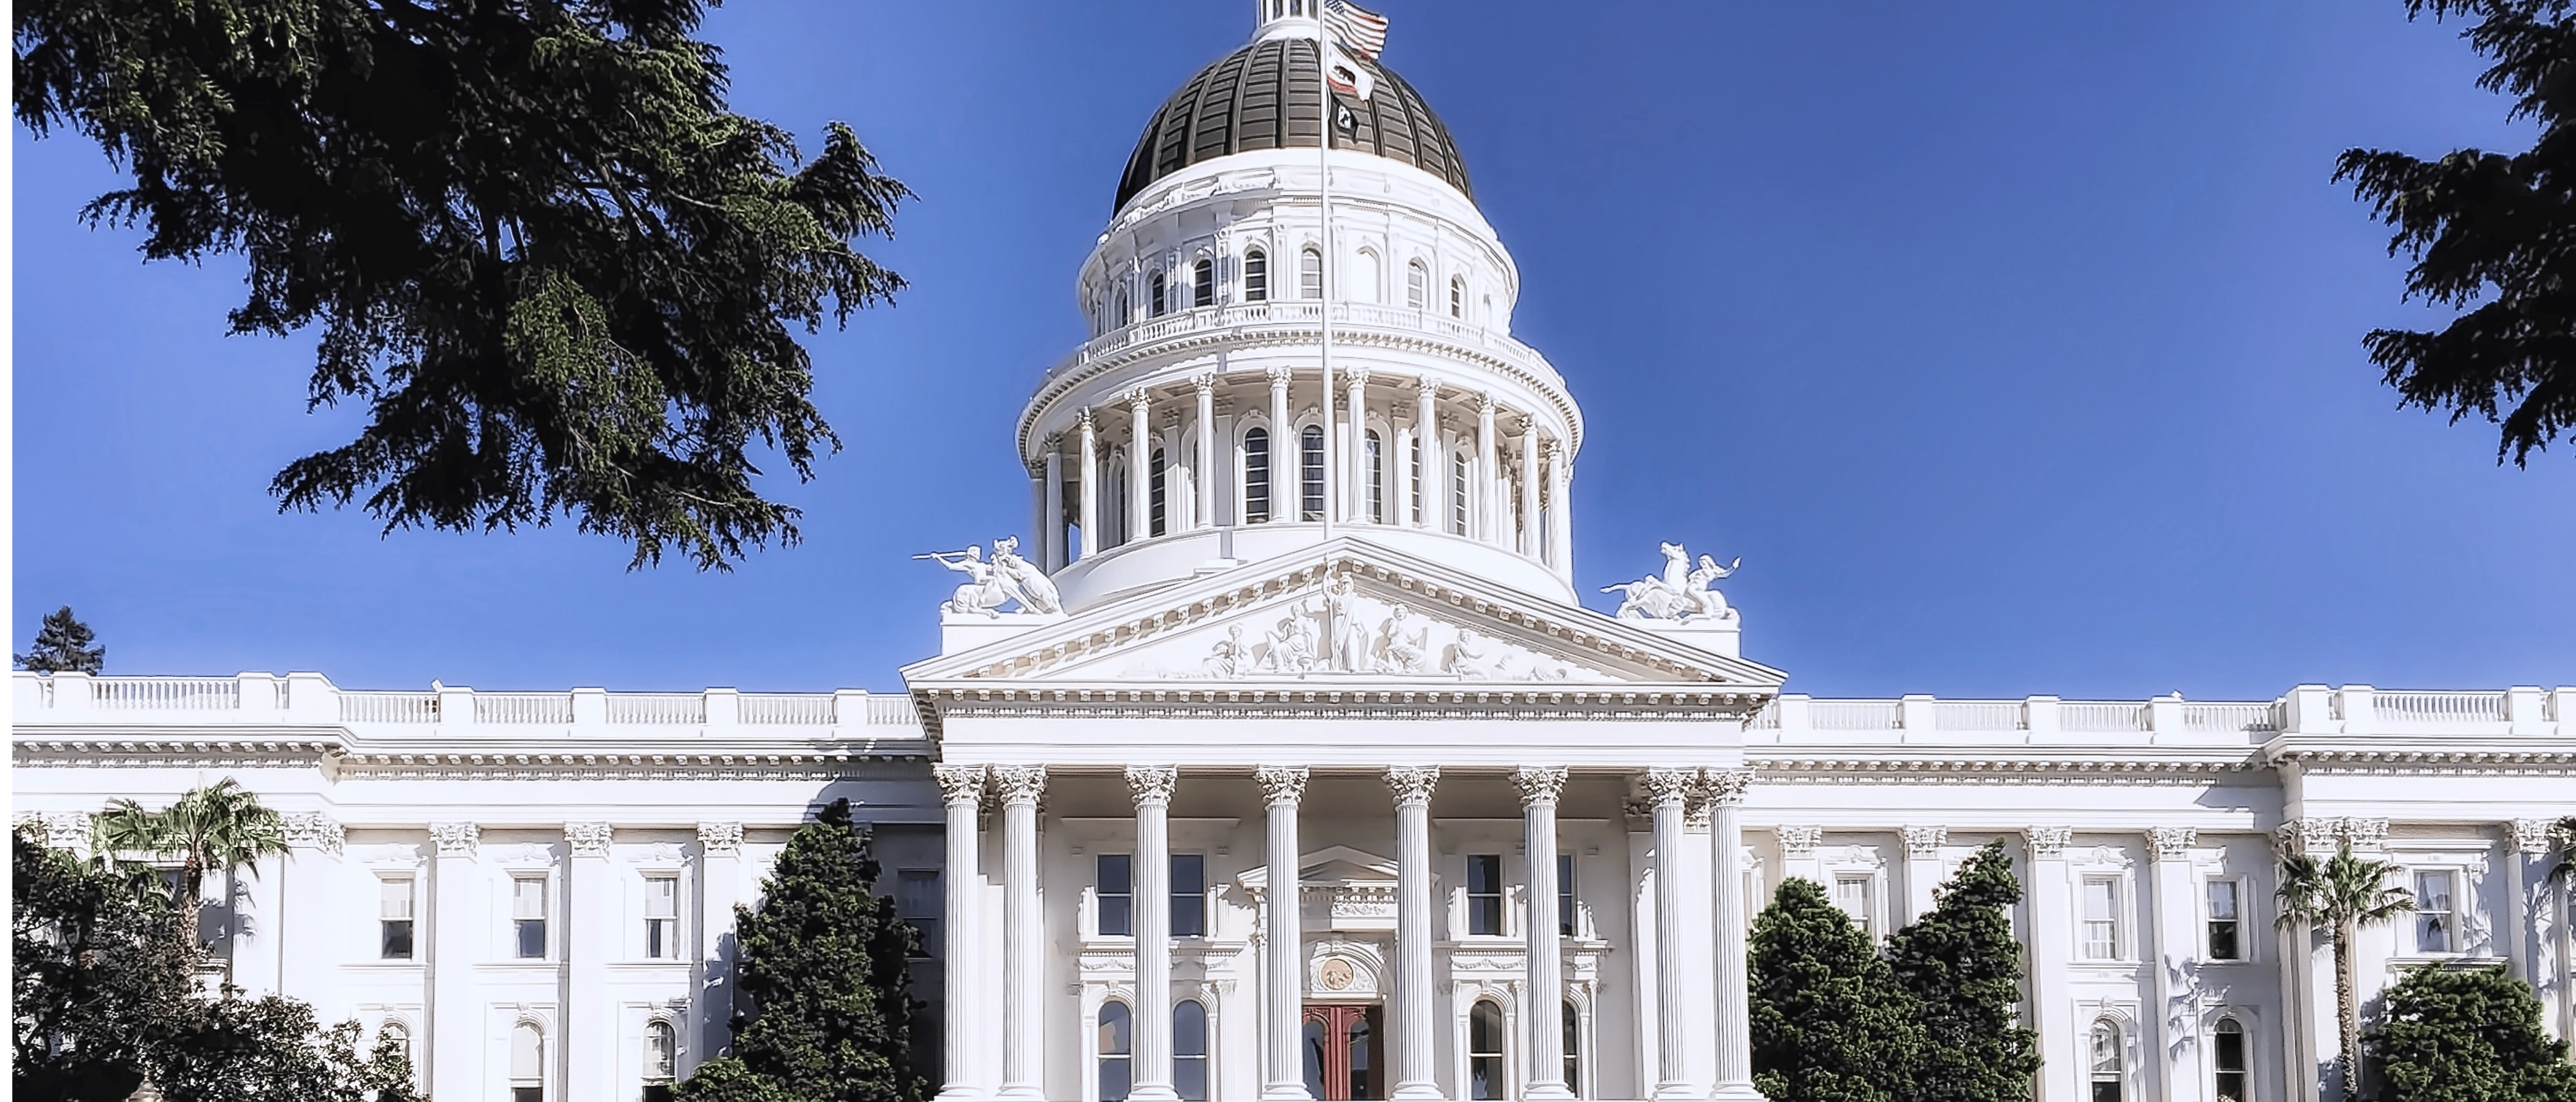 The California state capitol building in sacramento